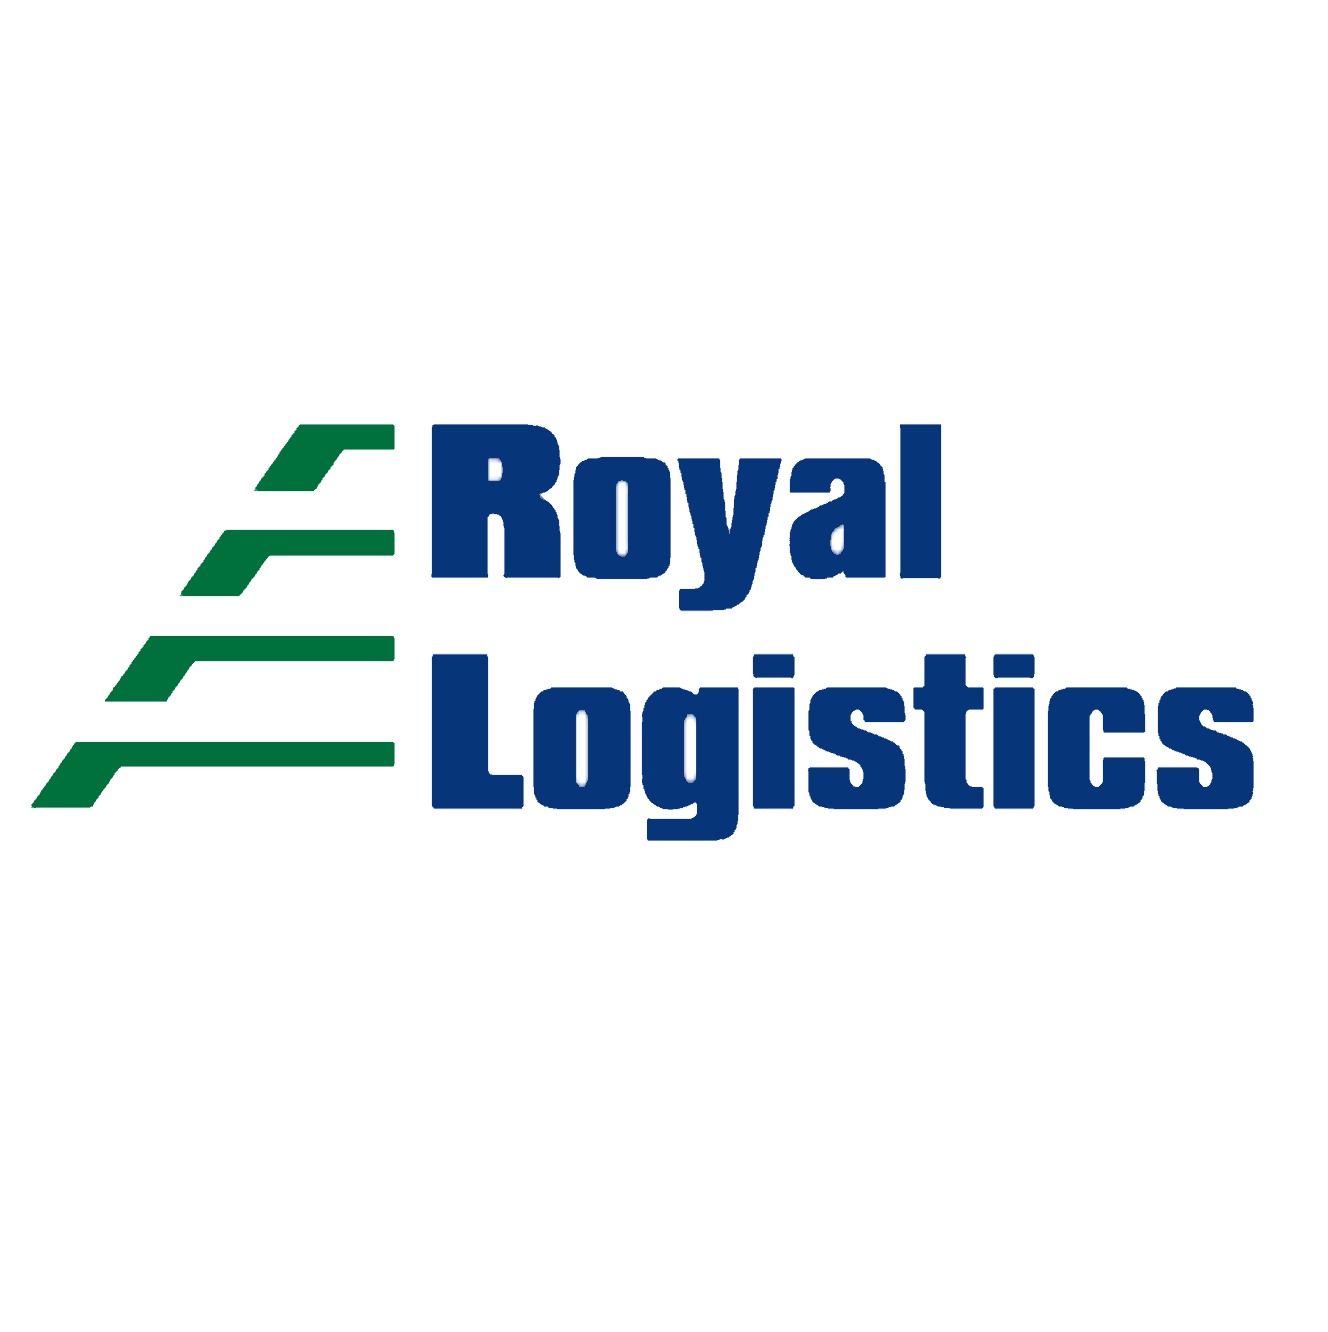 Royal Logistics services